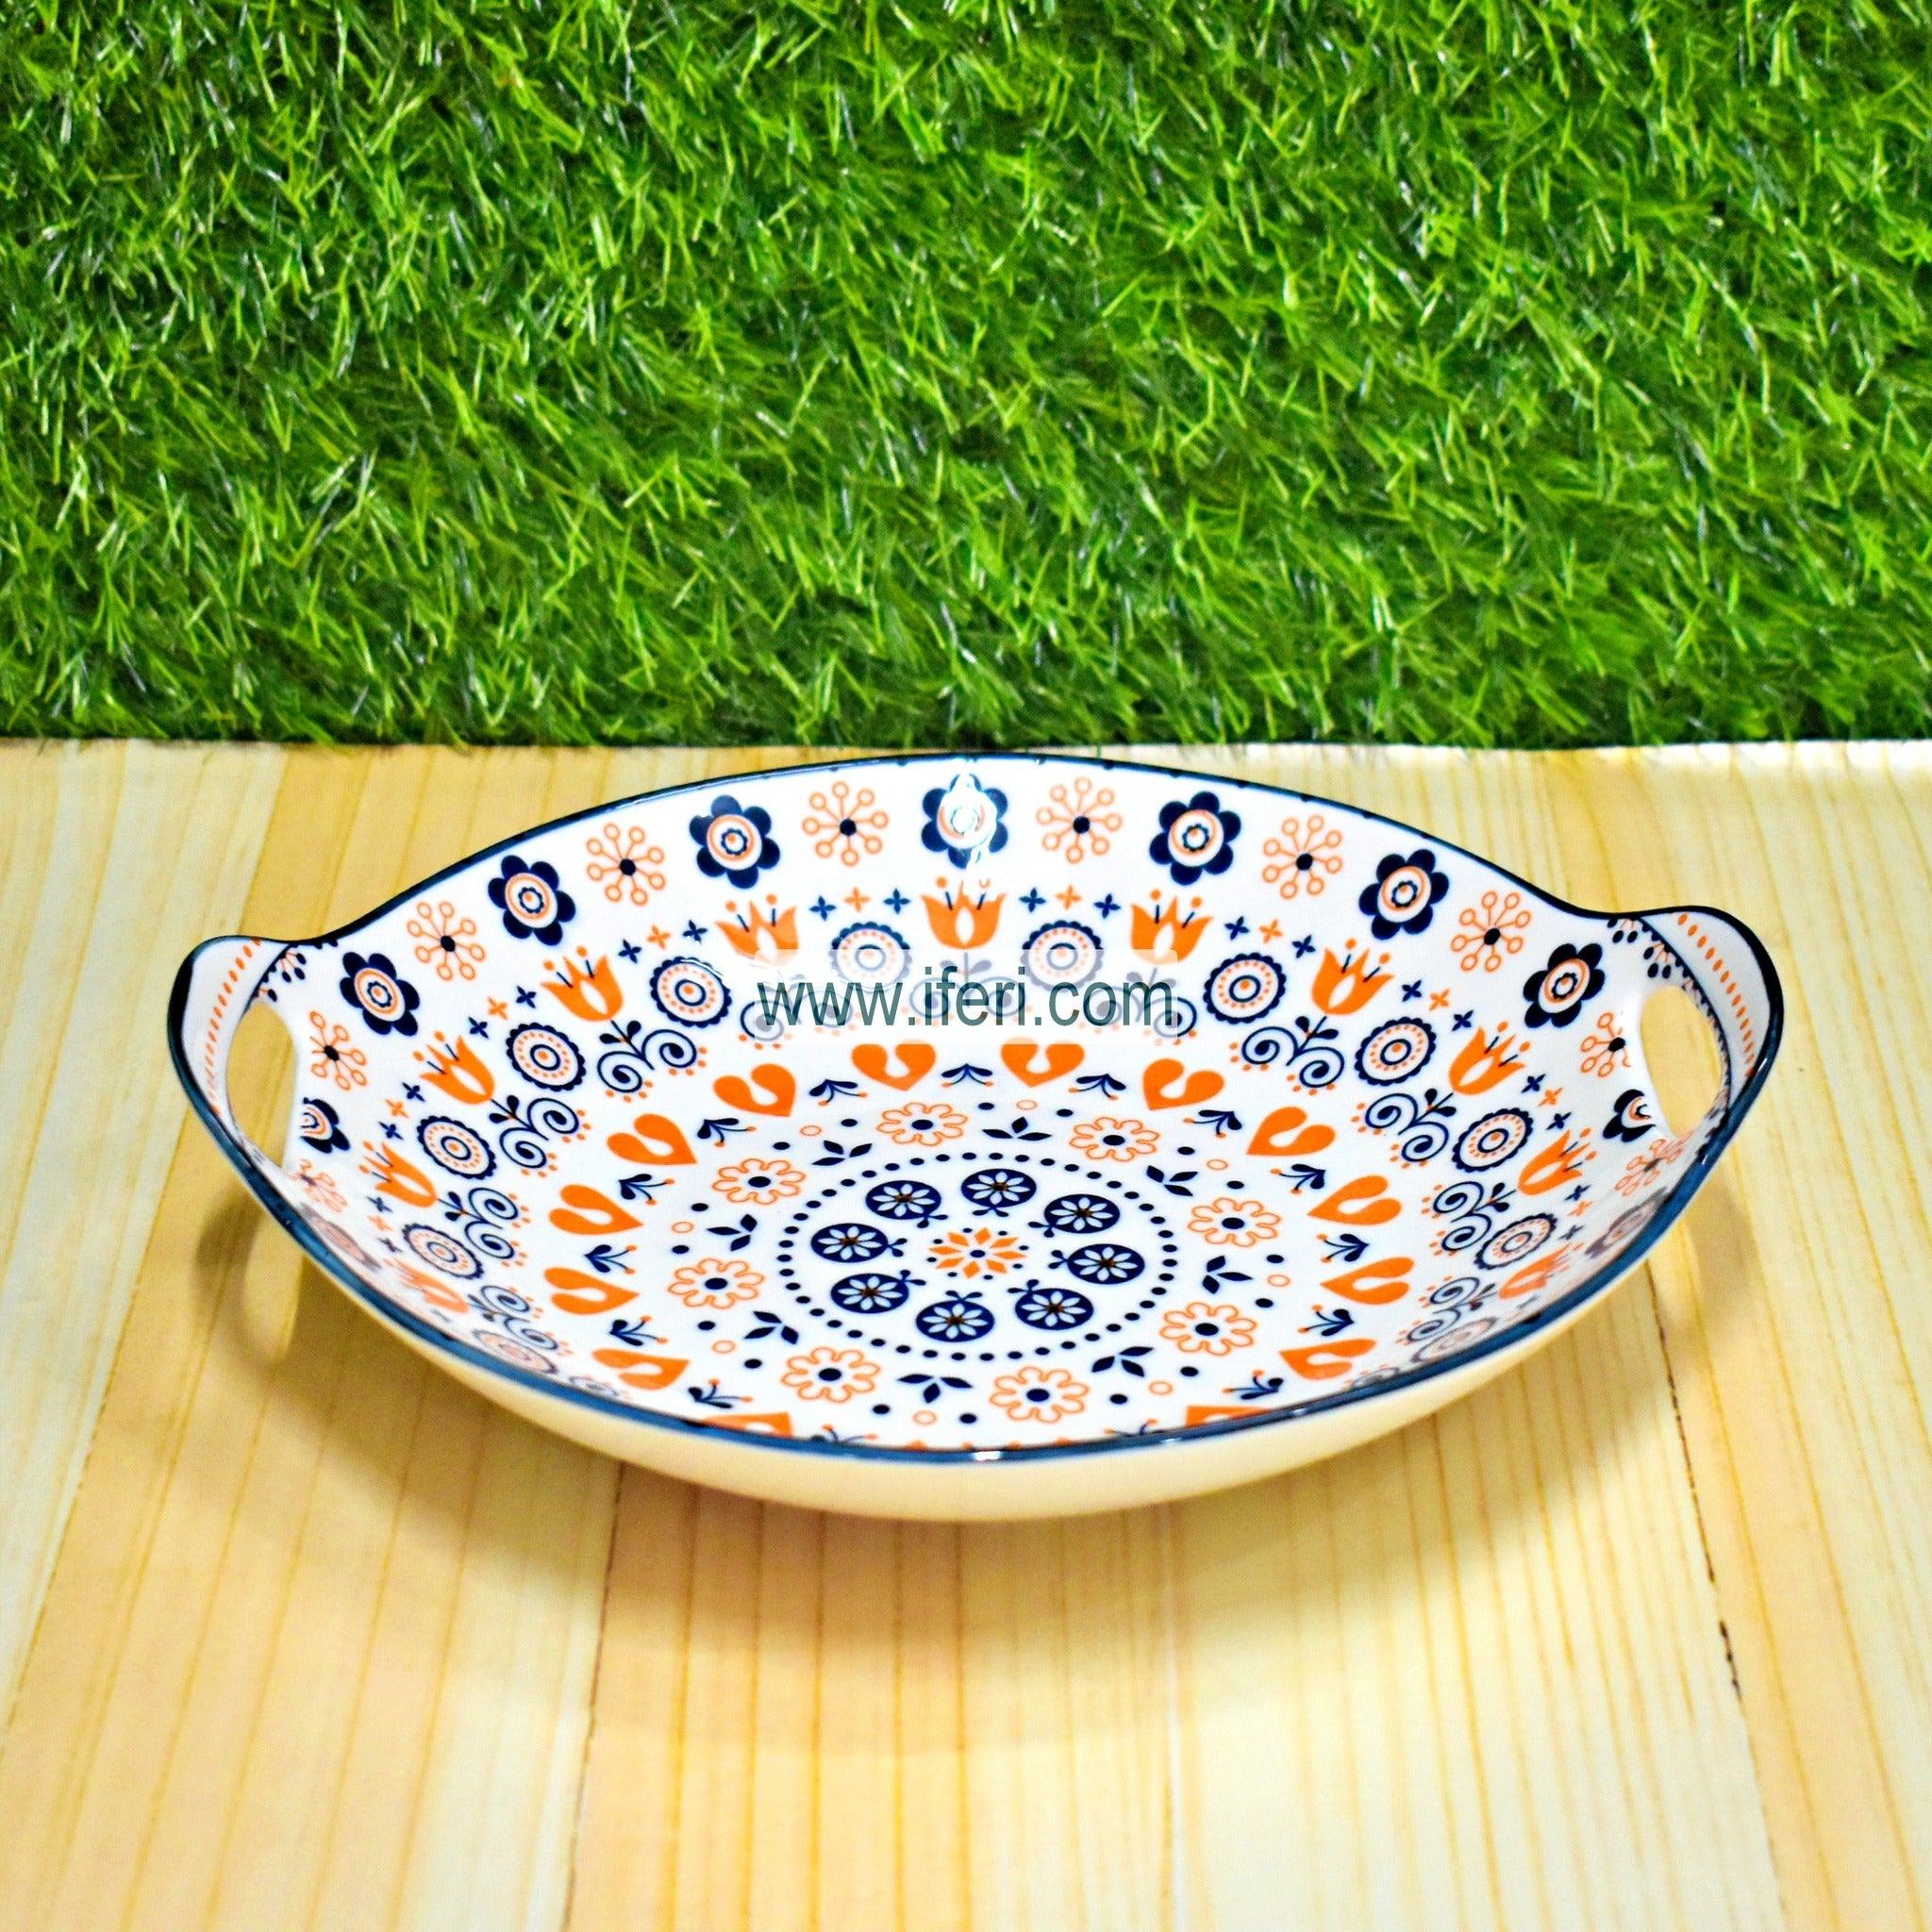 11 Inch Ceramic Salad/Kabab Serving Plate SY0093 Price in Bangladesh - iferi.com